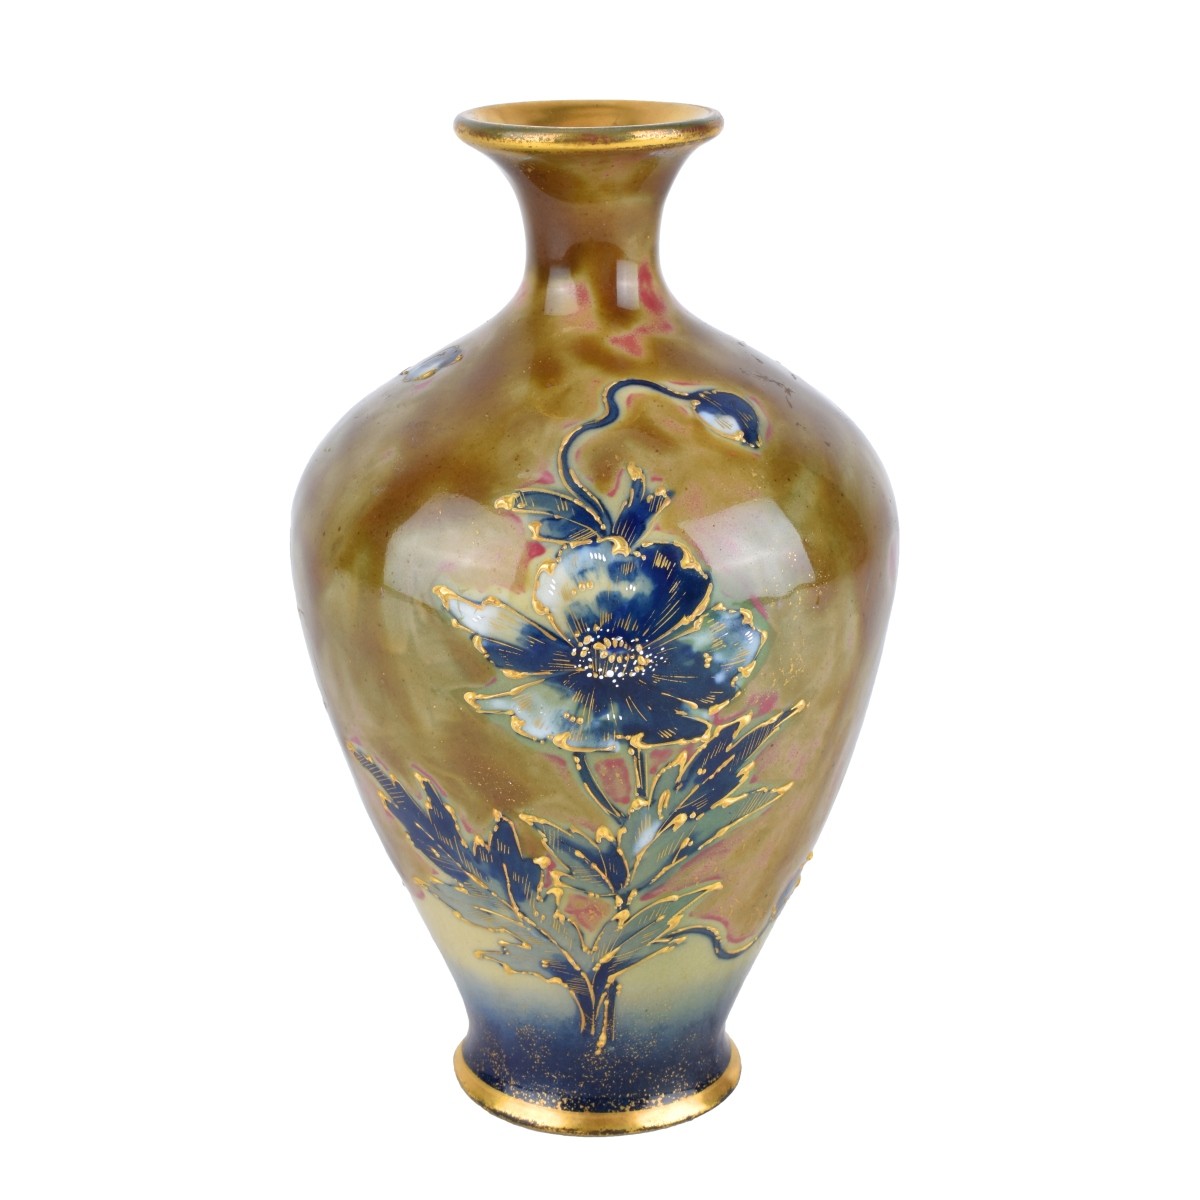 Turn Teplitz Amphora Porcelain Maiden Vase